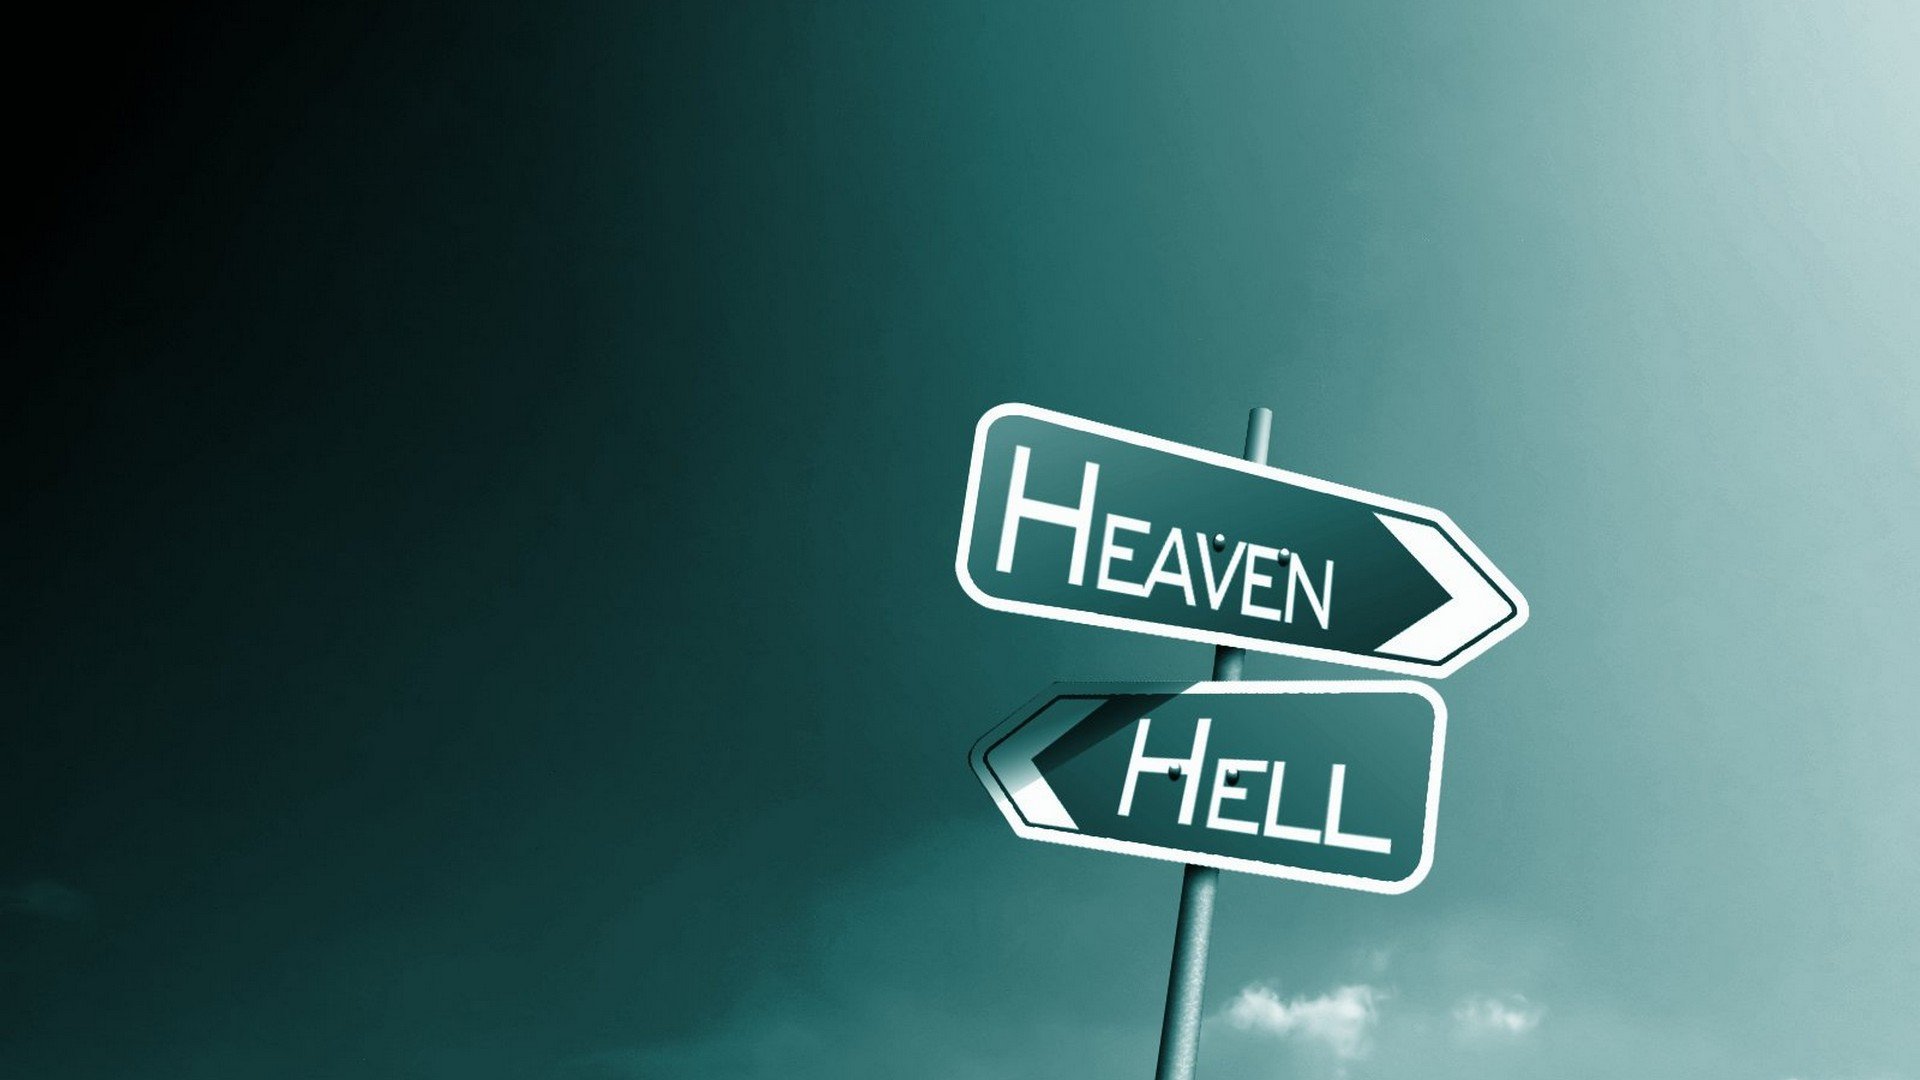 Free Download Christian Wallpaper Id - Heaven And Hell Wallpaper Hd - HD Wallpaper 